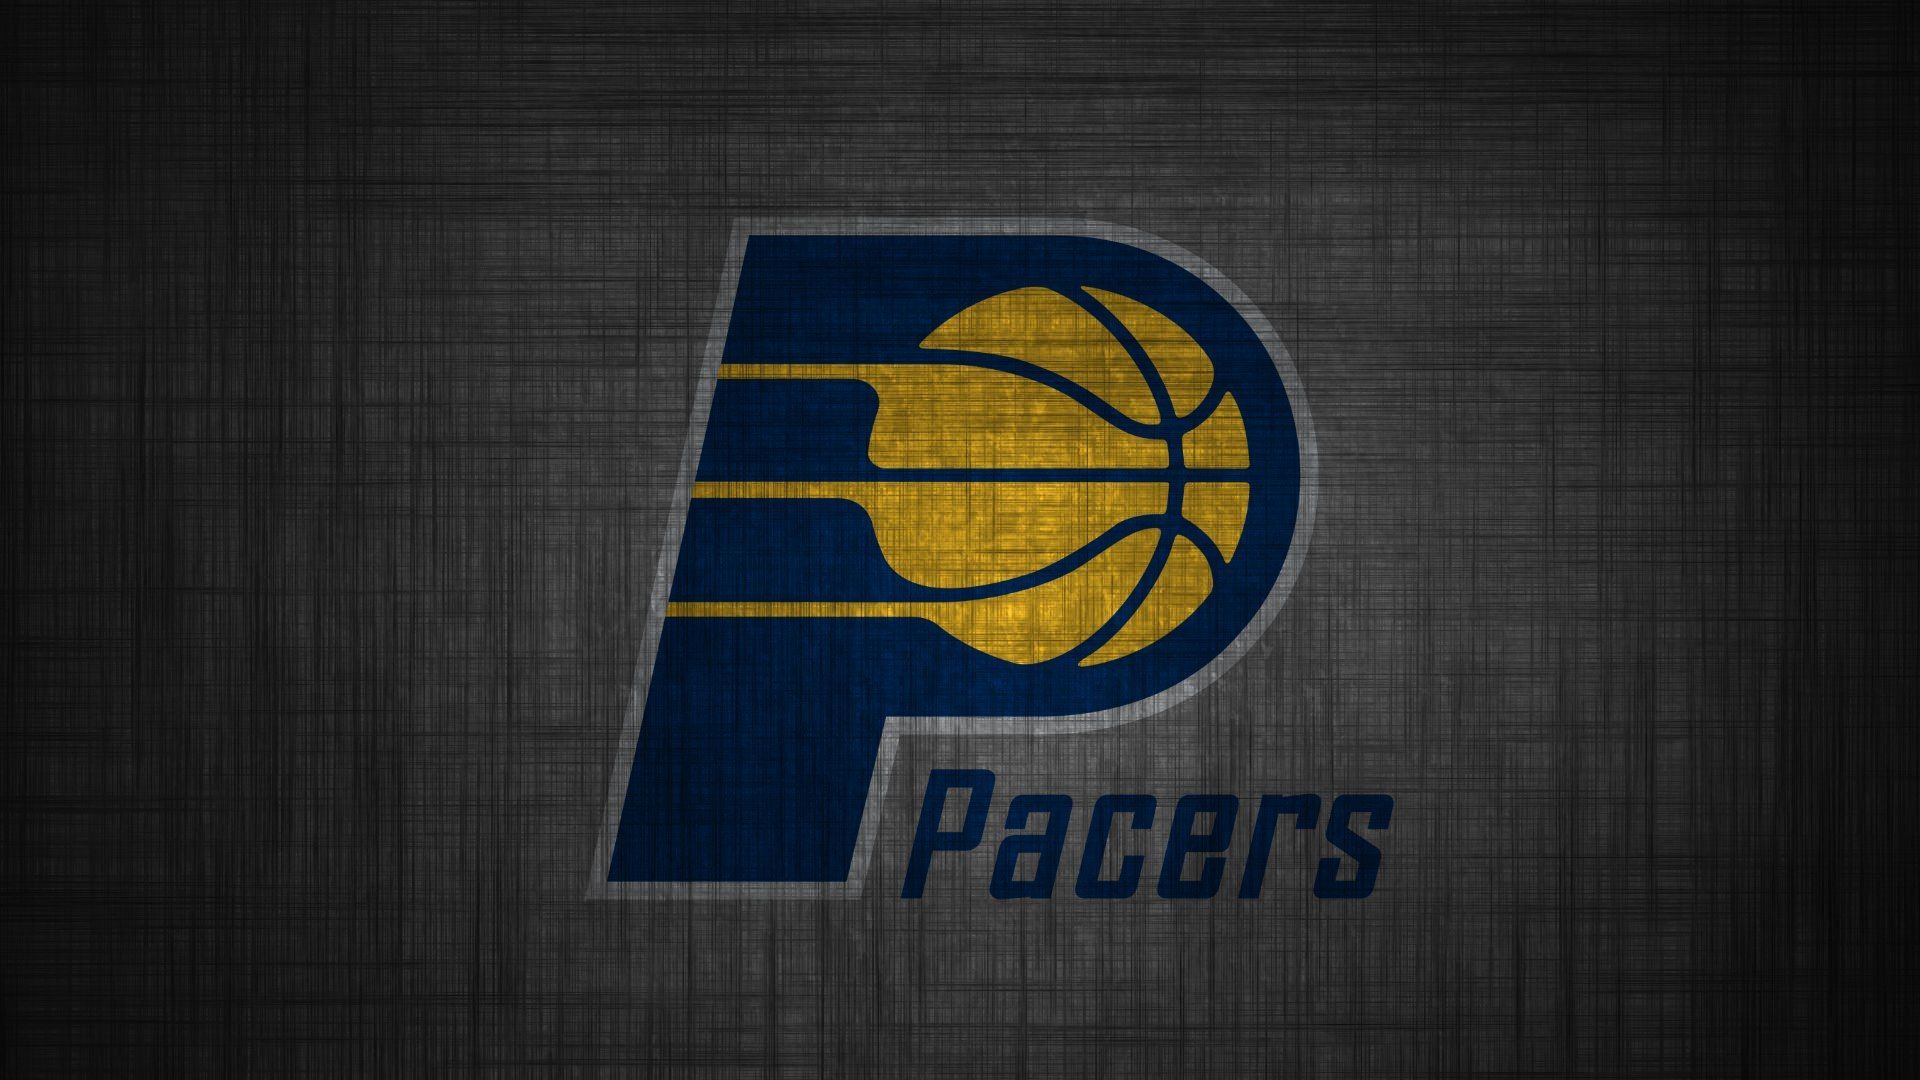 Indiana Pacers Logo Wallpaper. Basketball wallpaper, Basketball